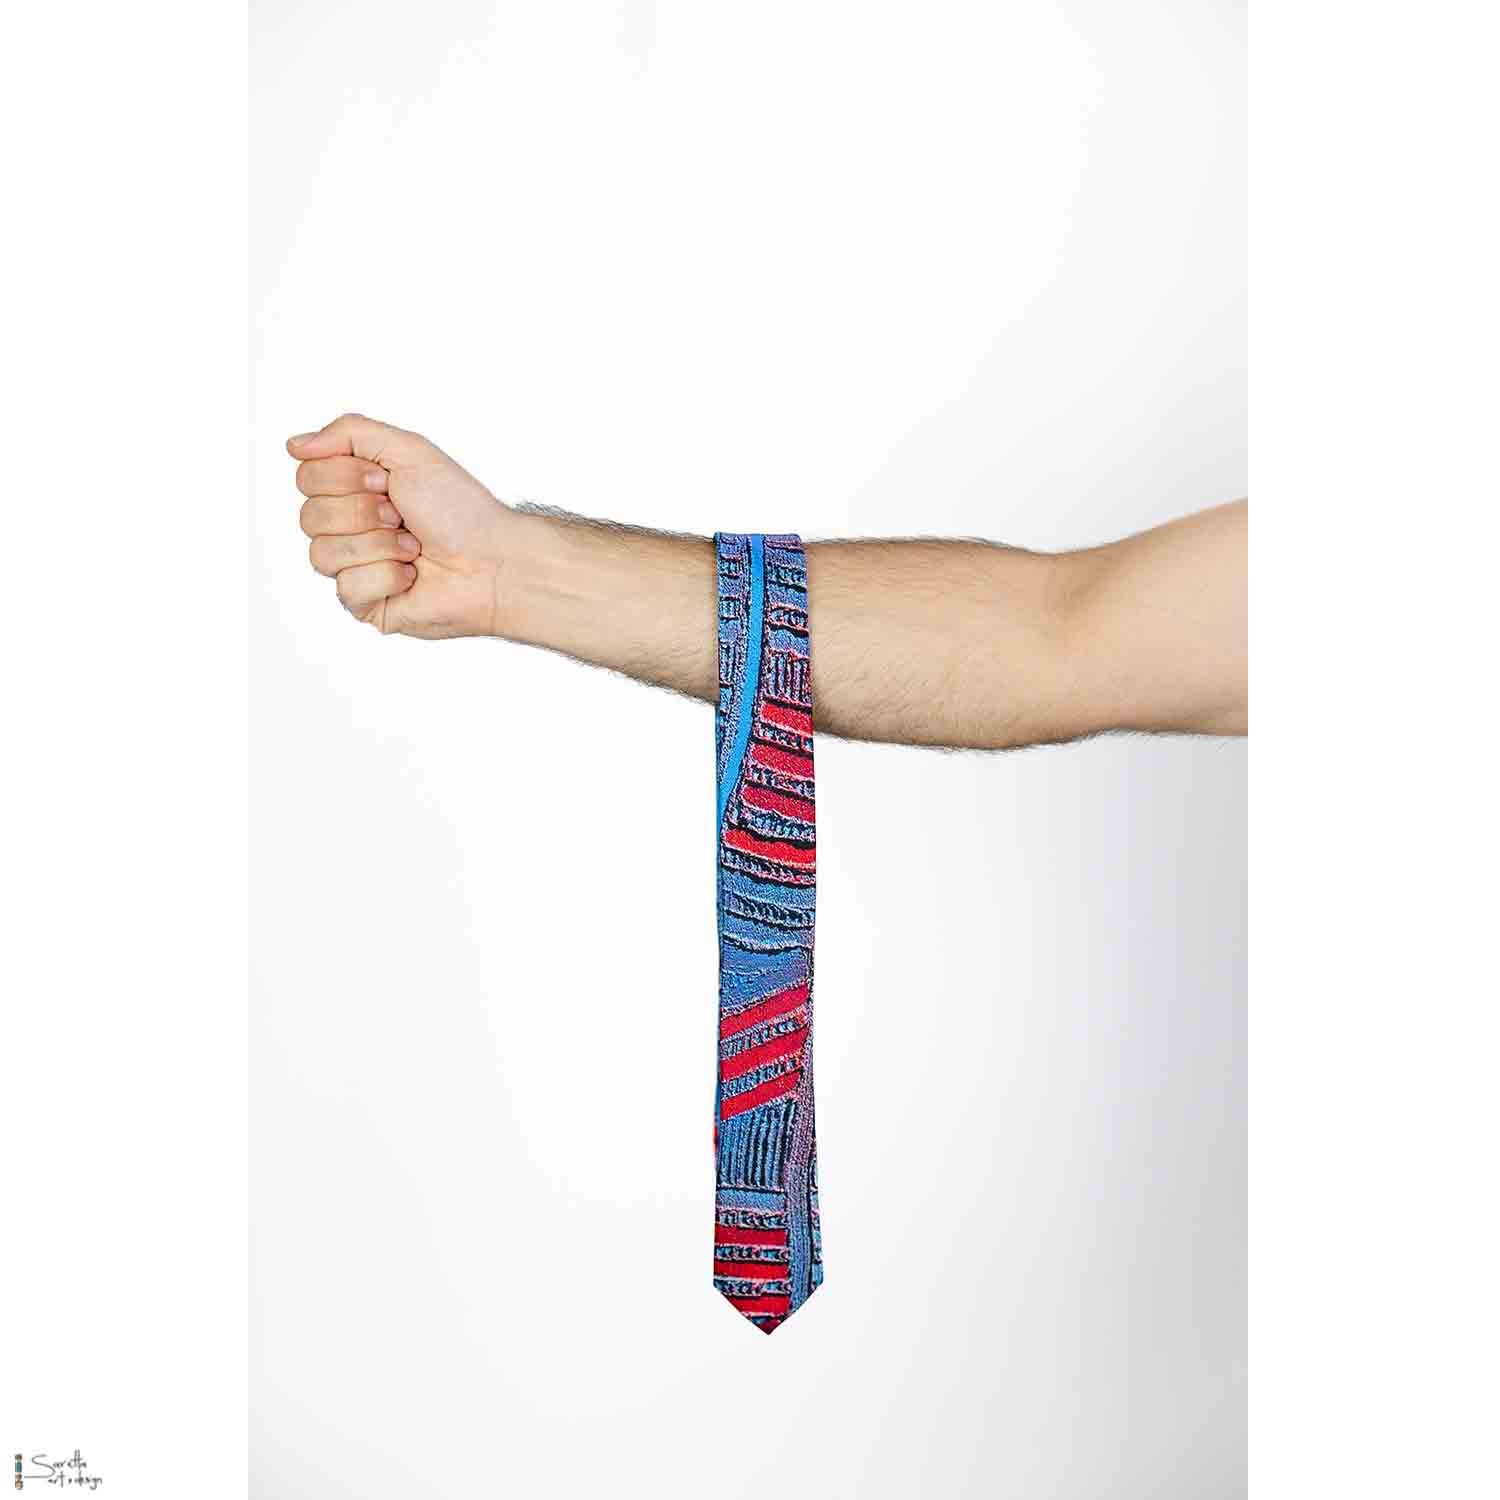 Men's Silk Ties - Wuruwai - Battle - Saretta Art & Design